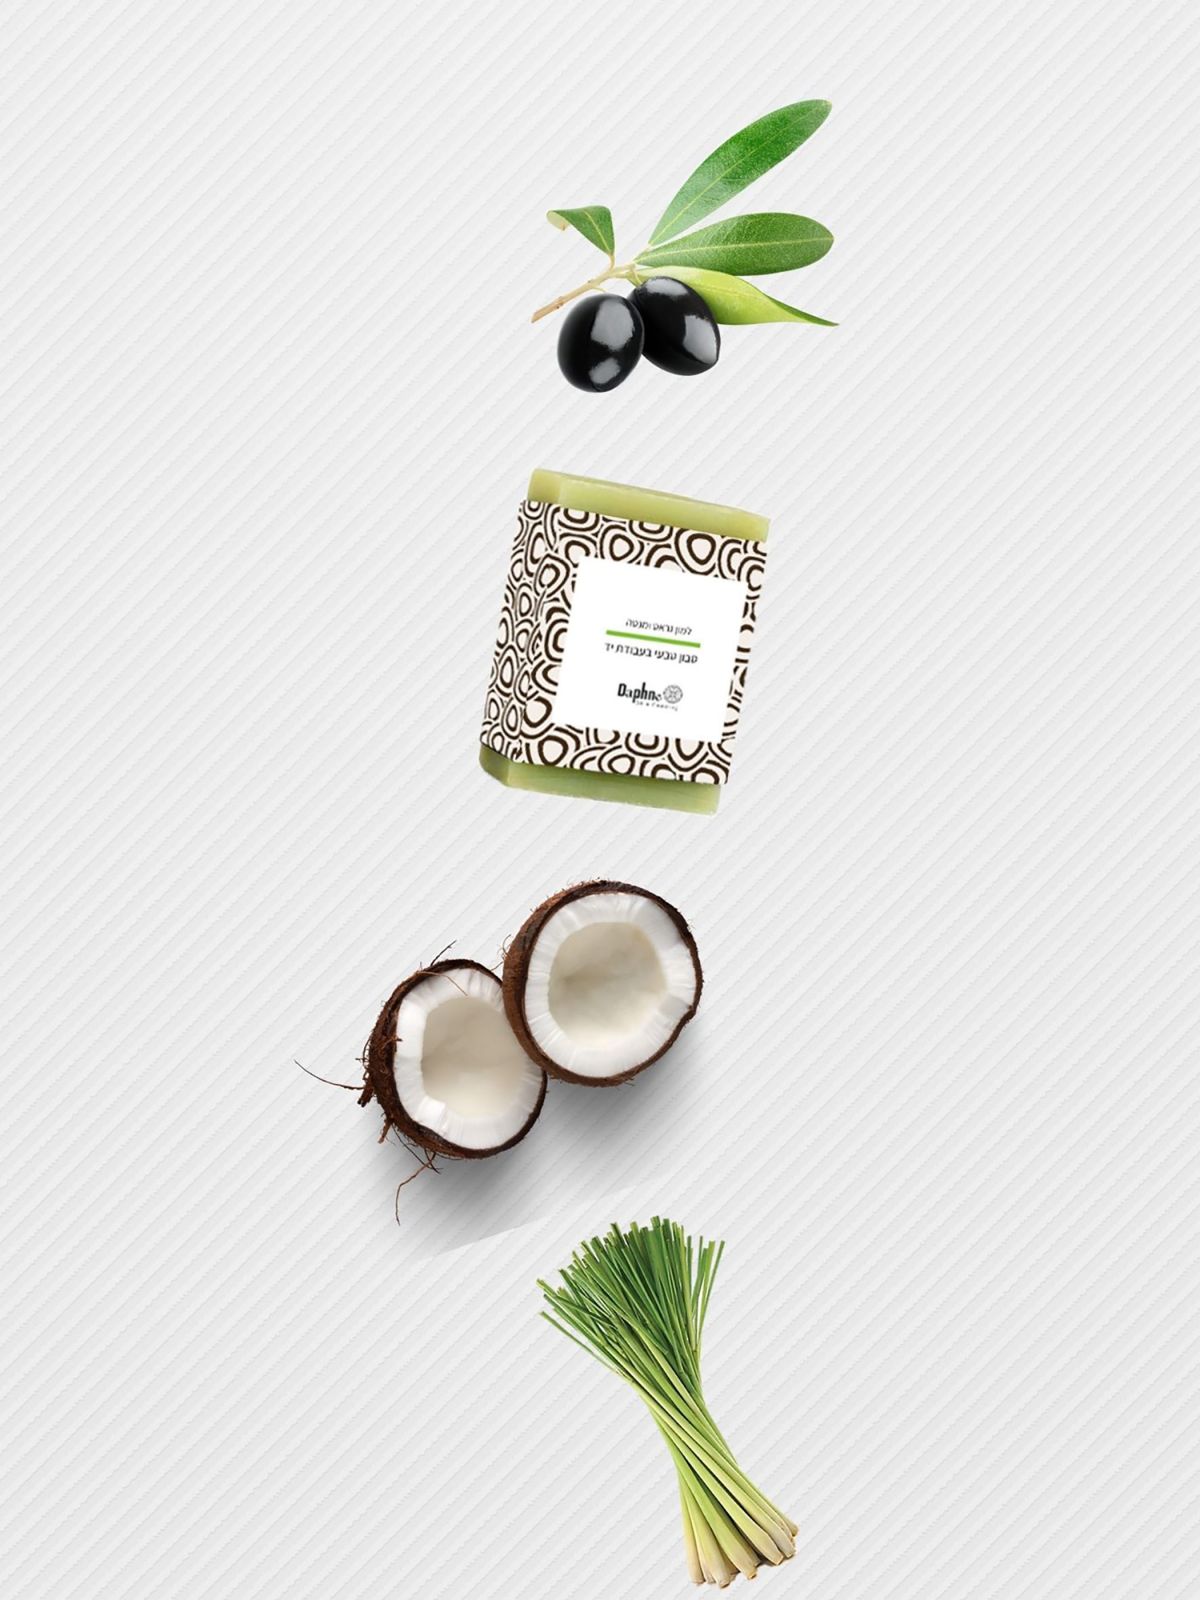  סבון טבעי עבודת יד למון גראס ומנטה Handmade Natural Soap Lemongrass and Mint של DAPHNE